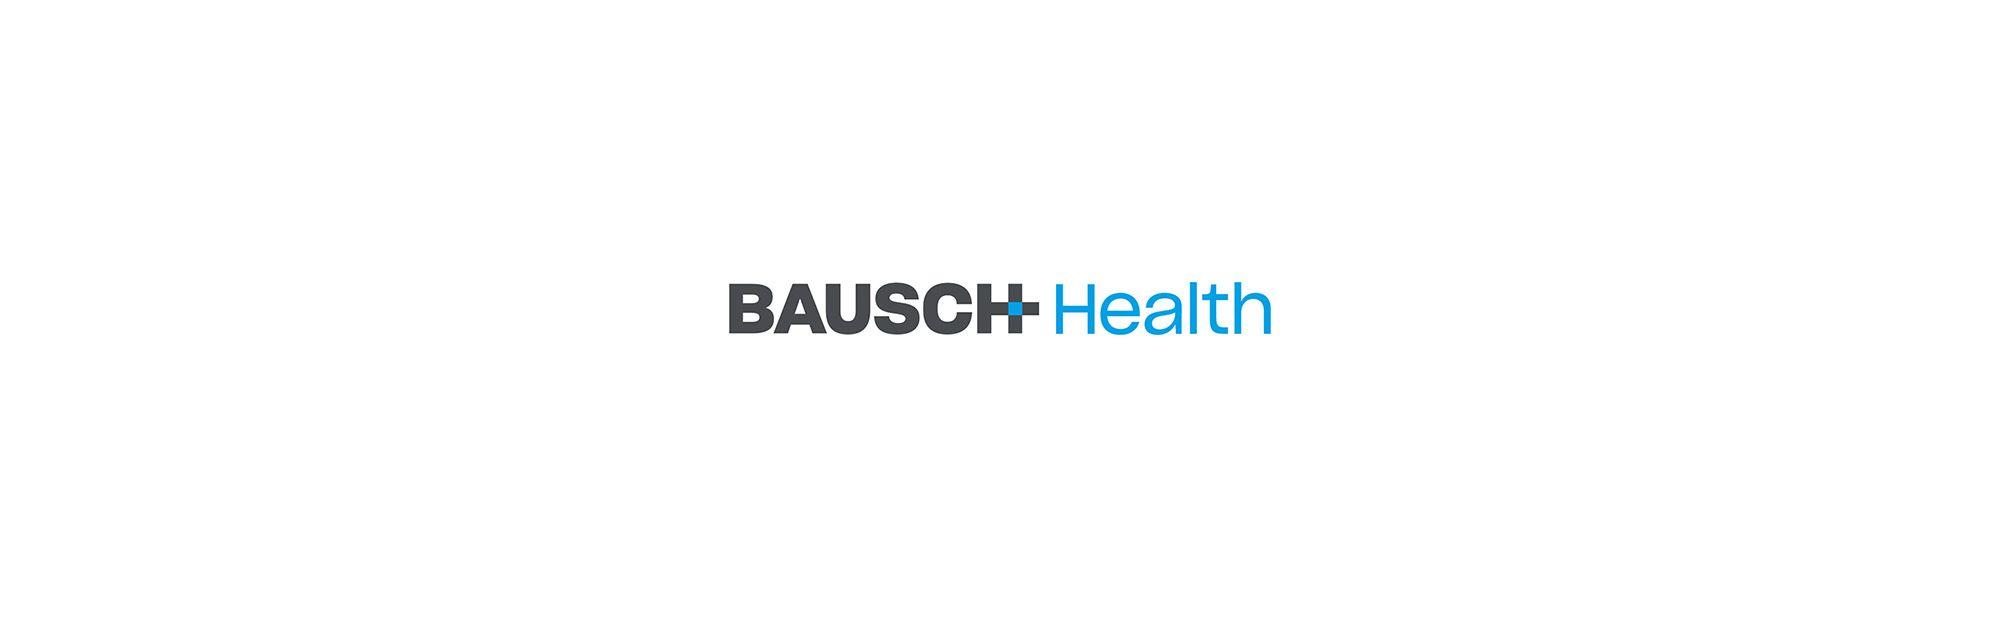 Health Company Logo - Bausch Health Companies Inc. Completes Name Change